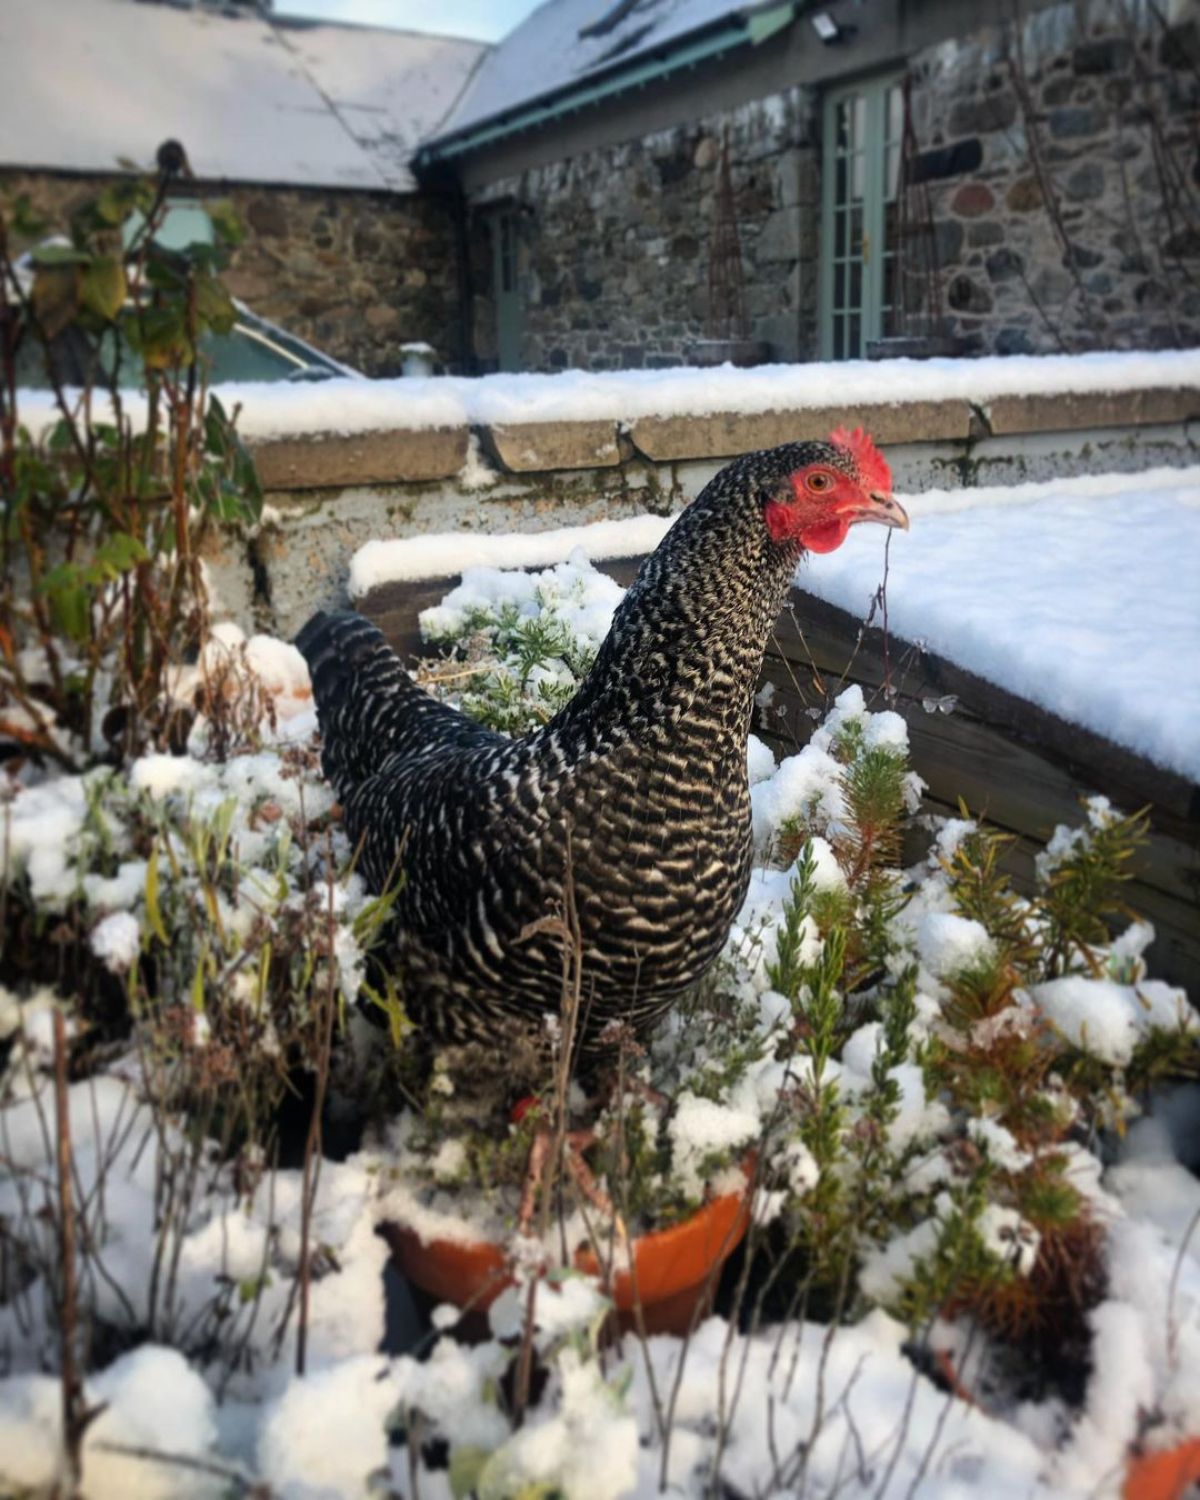 A barred Scots Grey hen stands in a herb garden.